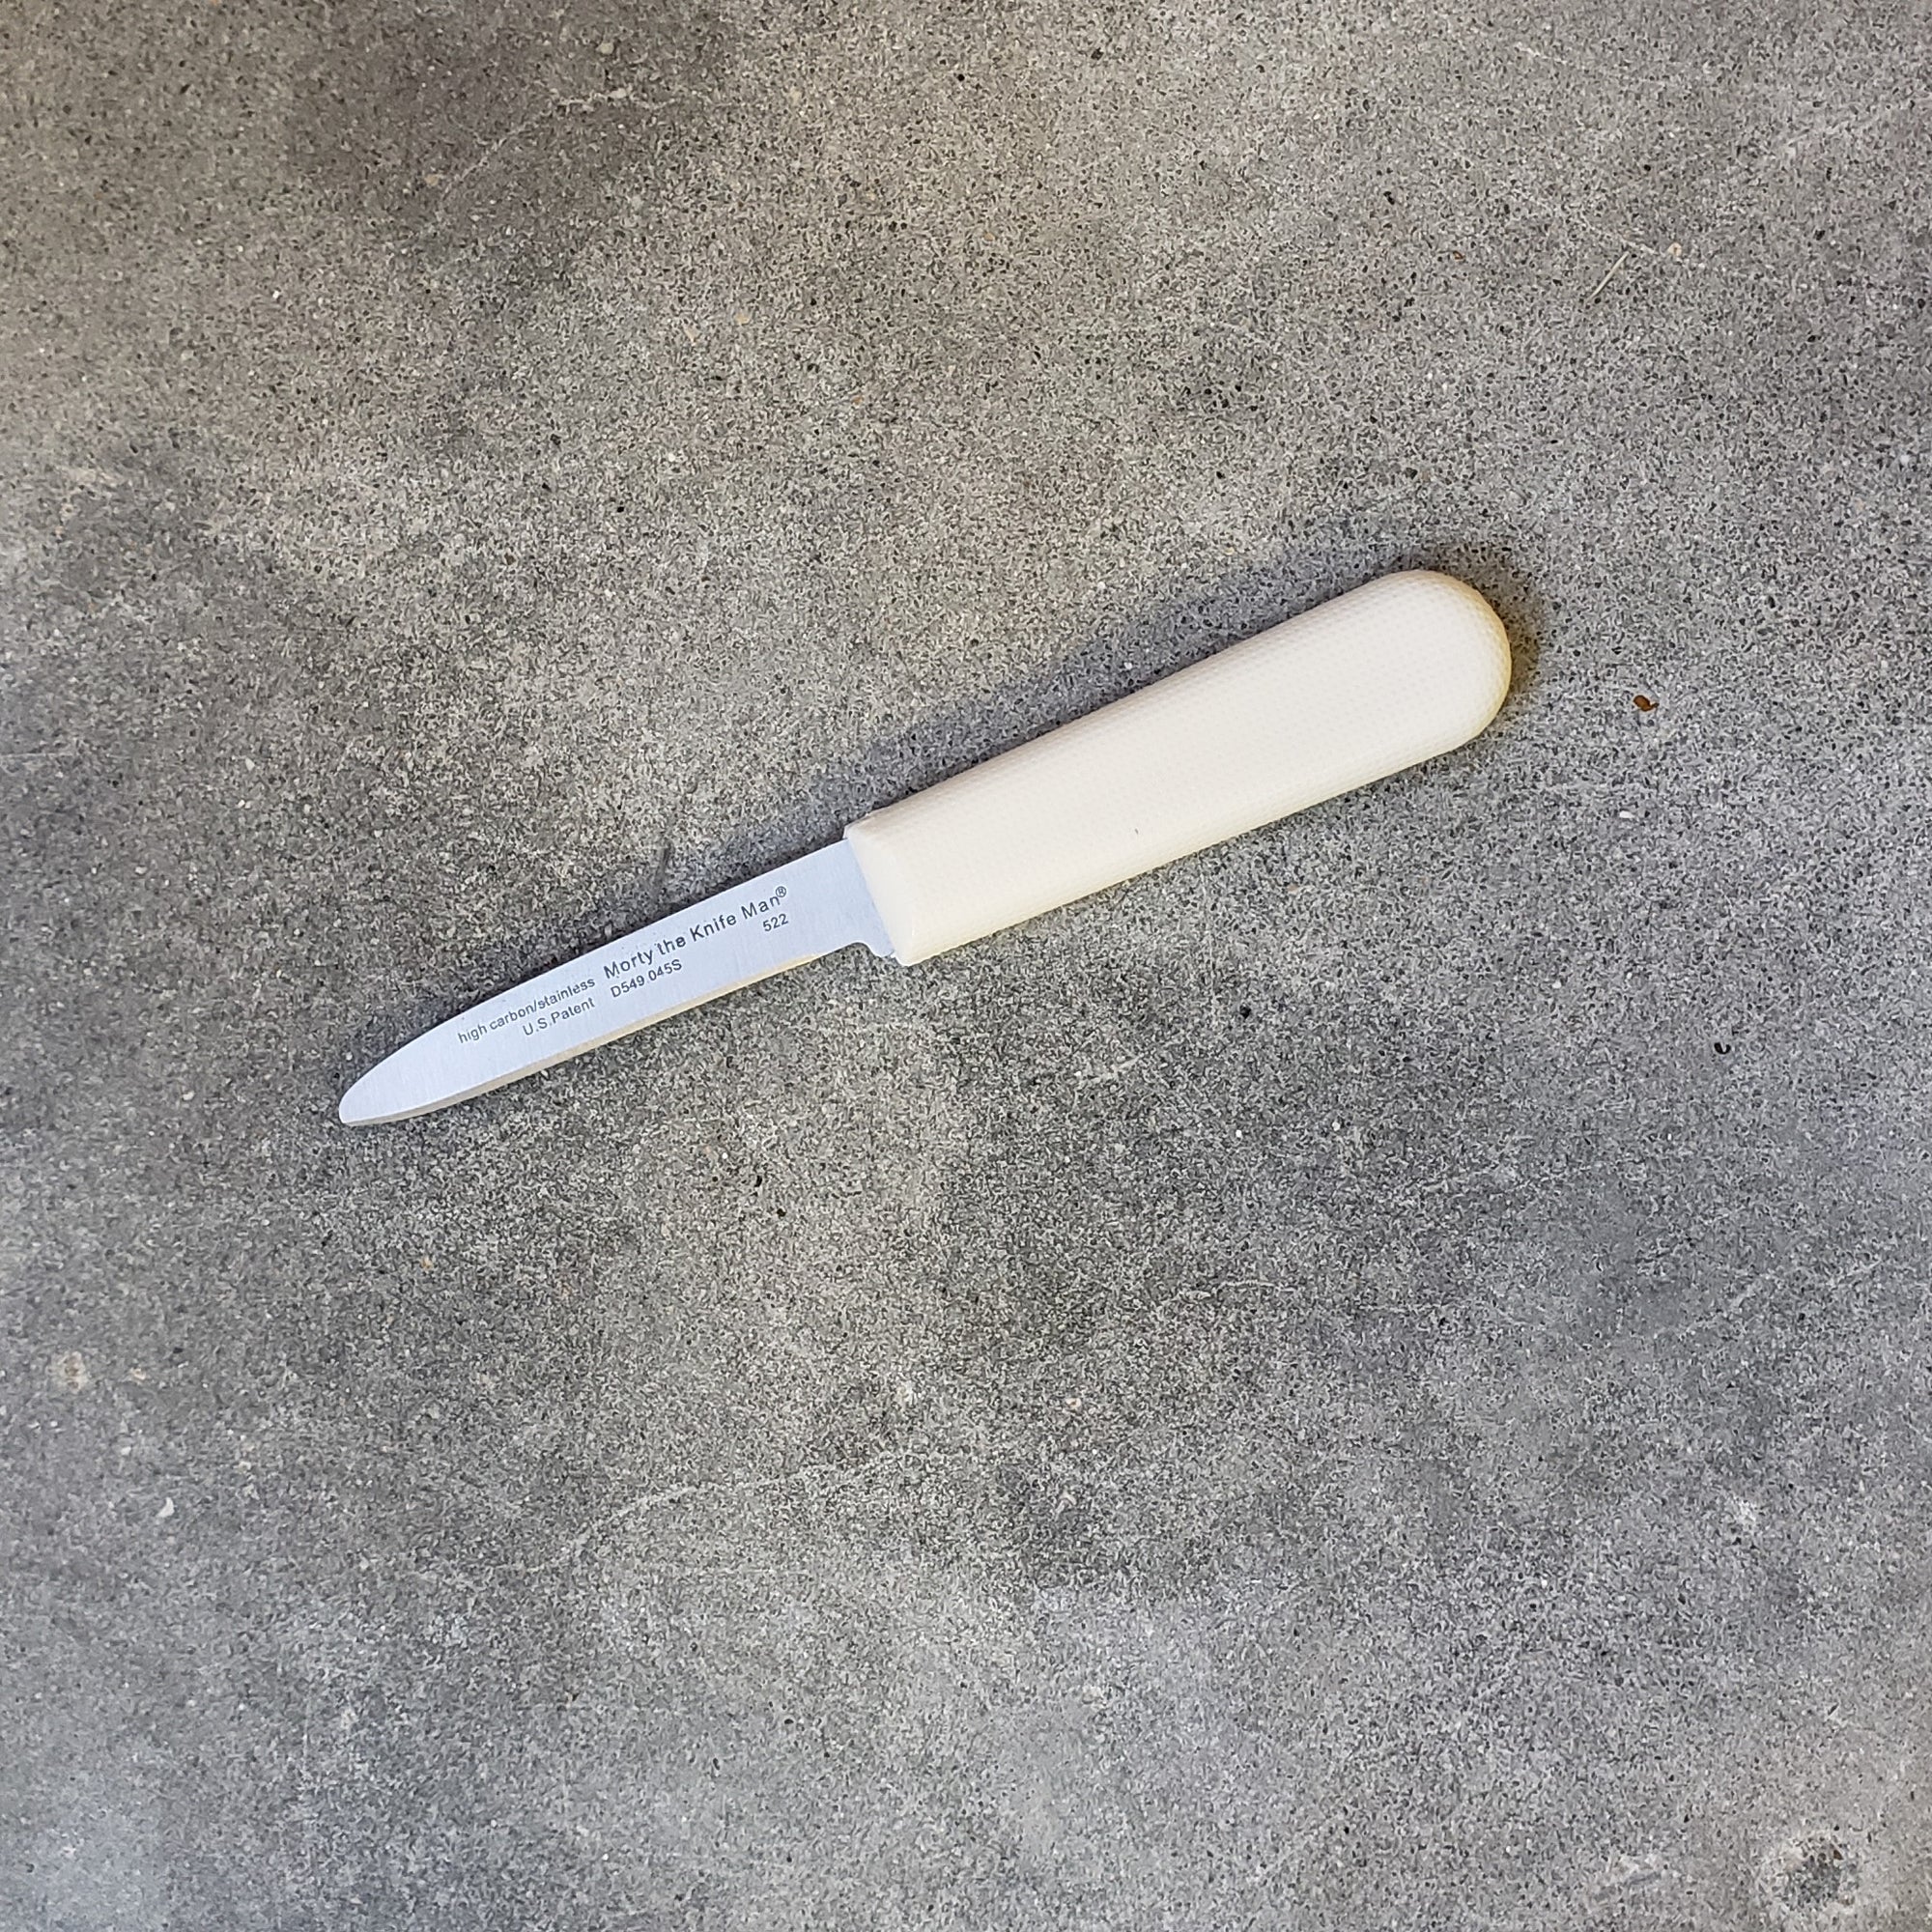 Large Clam Knife